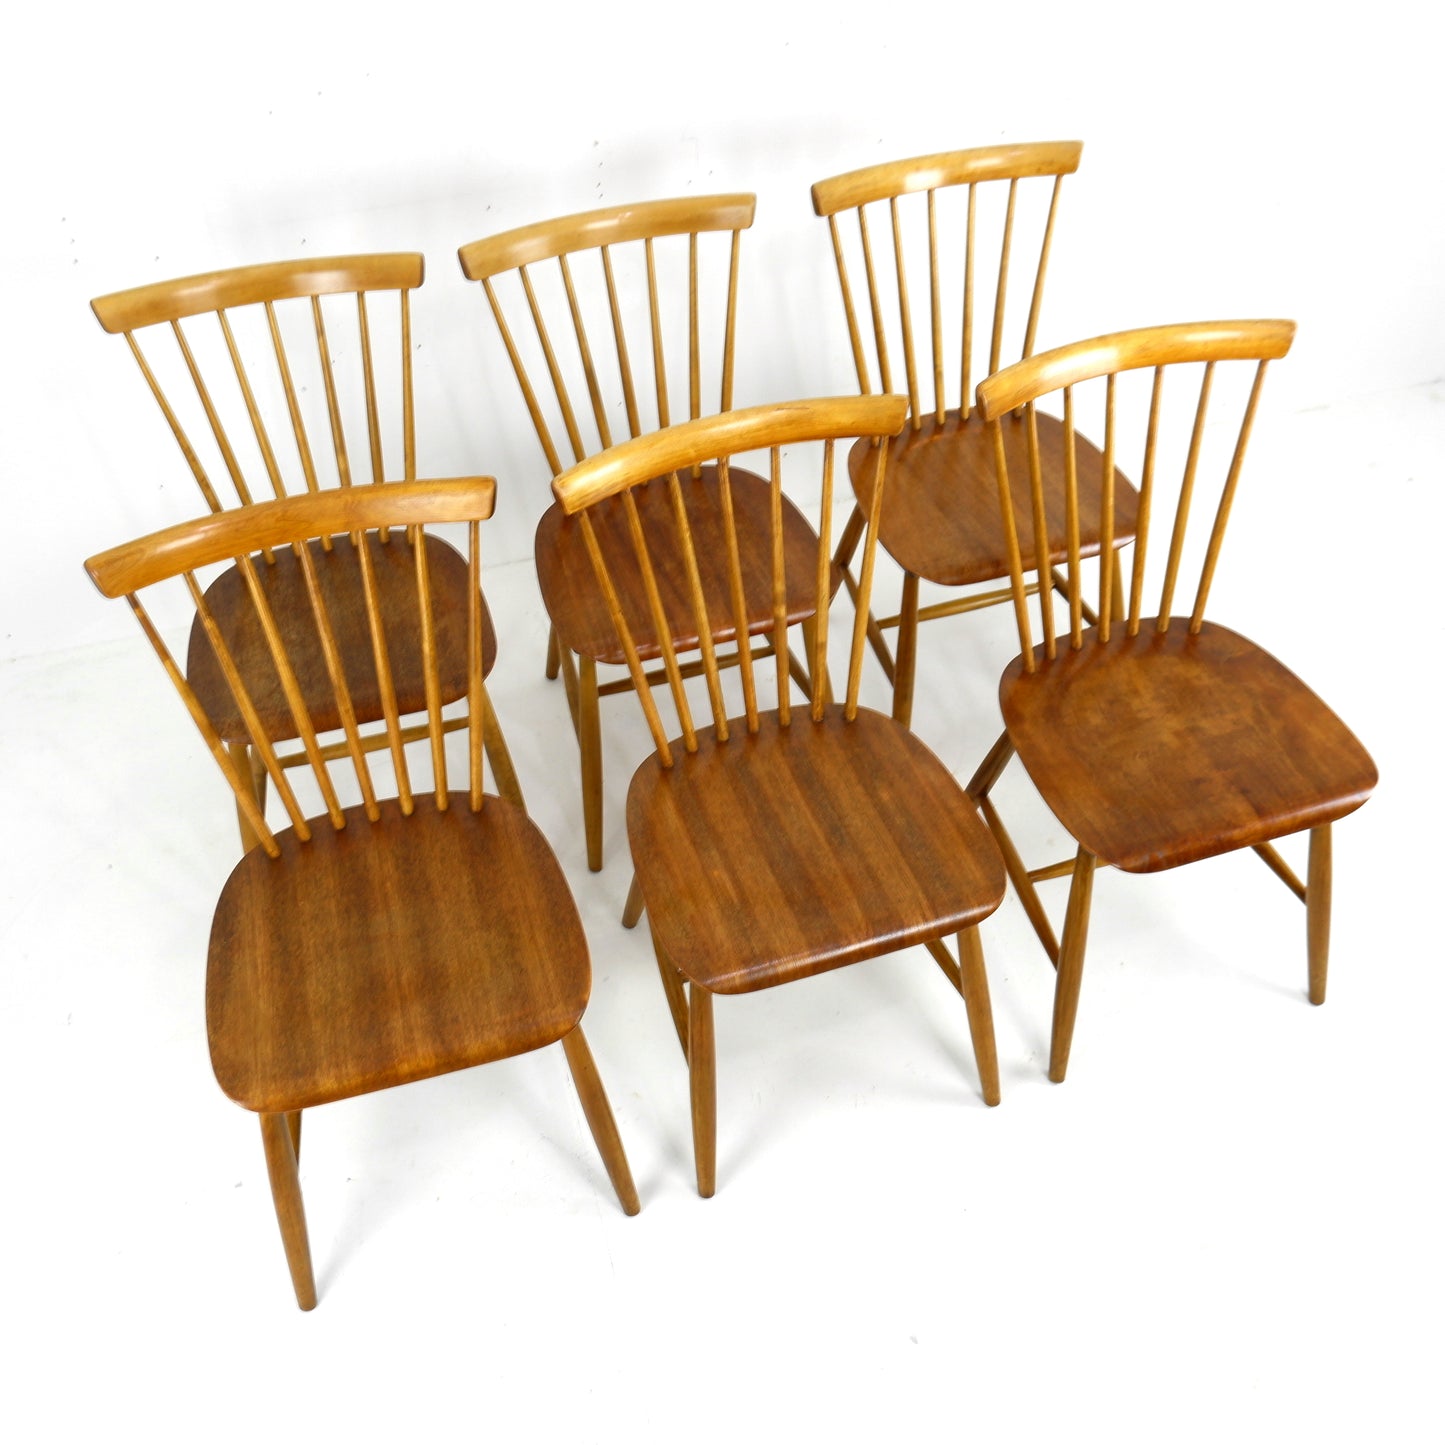 Mid Century Swedish Dining Chairs for Haga Fors Mobel by Sven Erik Fryklund - Set of 6 Mid Century